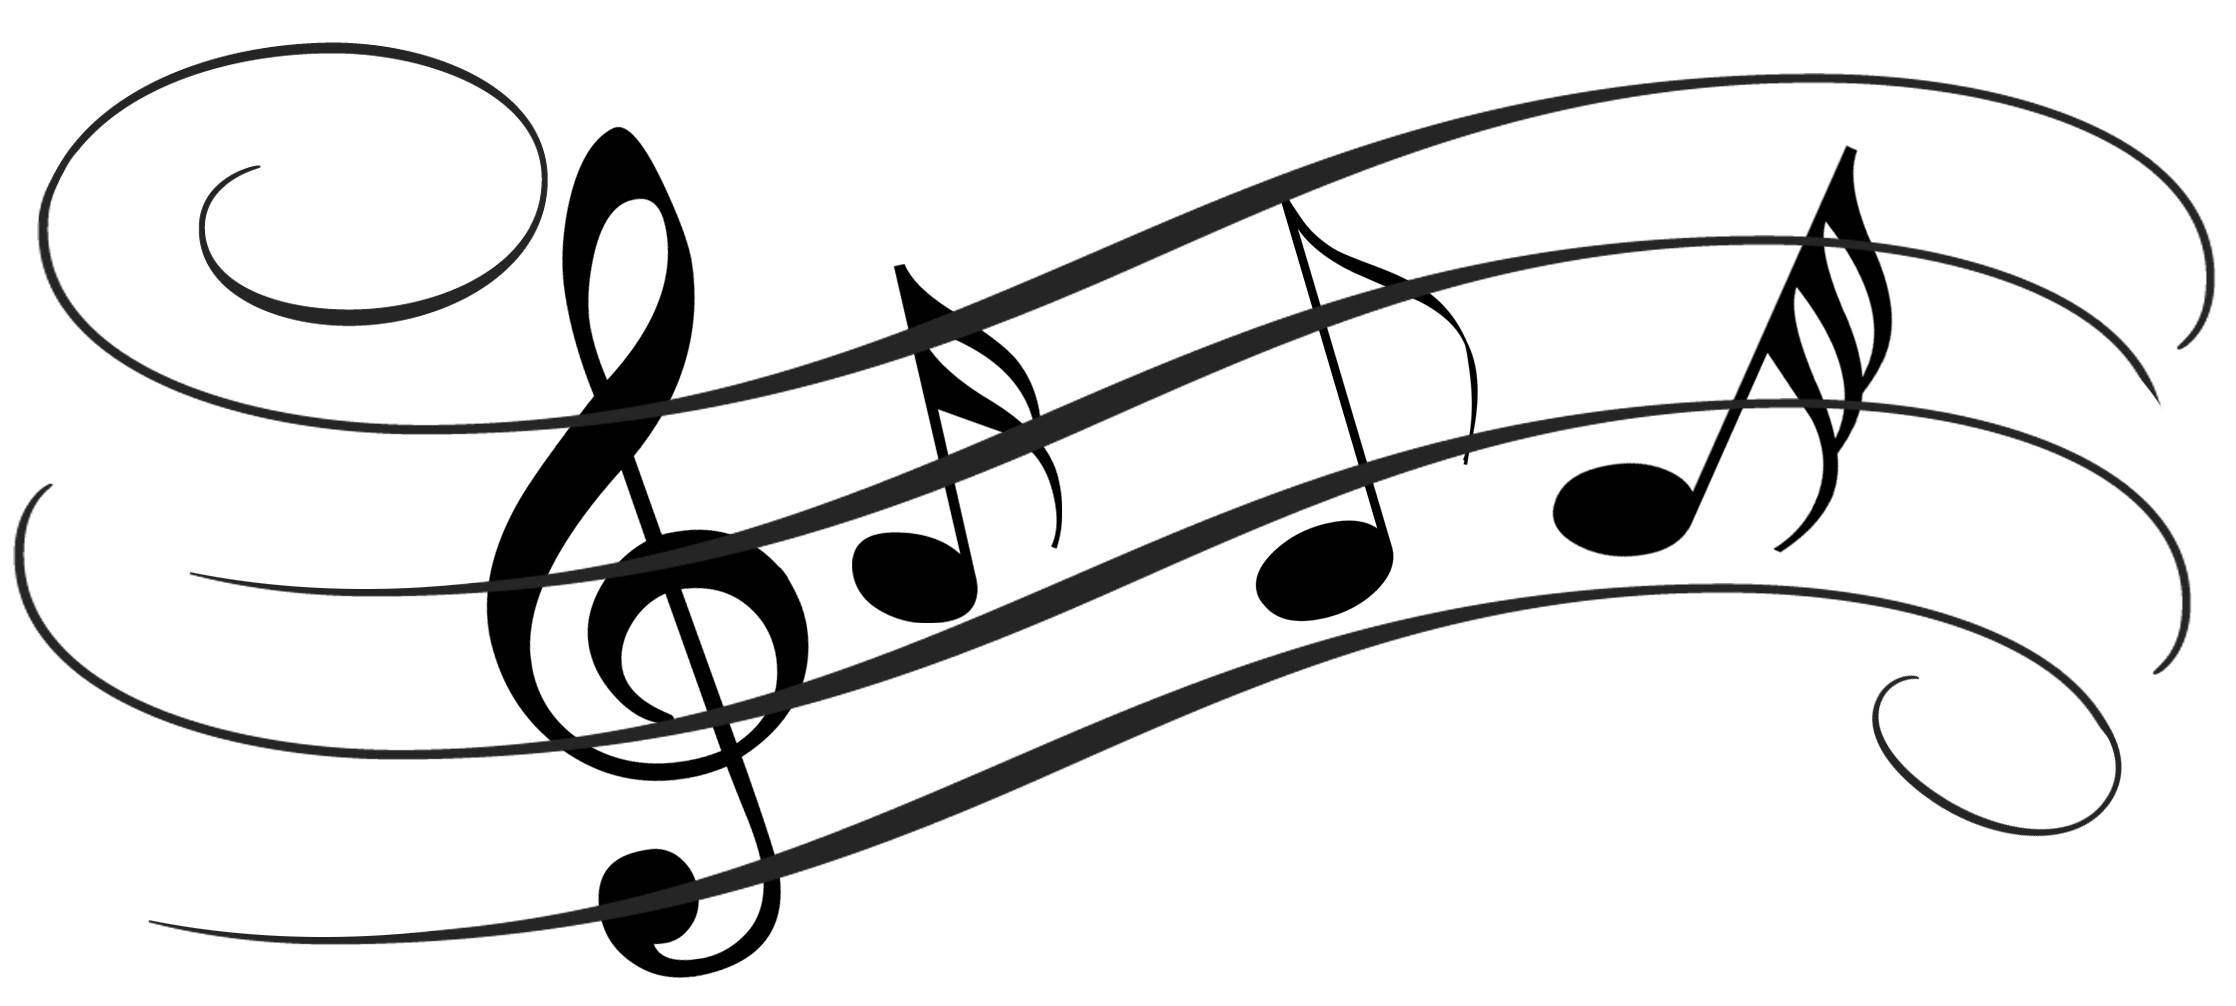 clip art of music symbols - photo #6